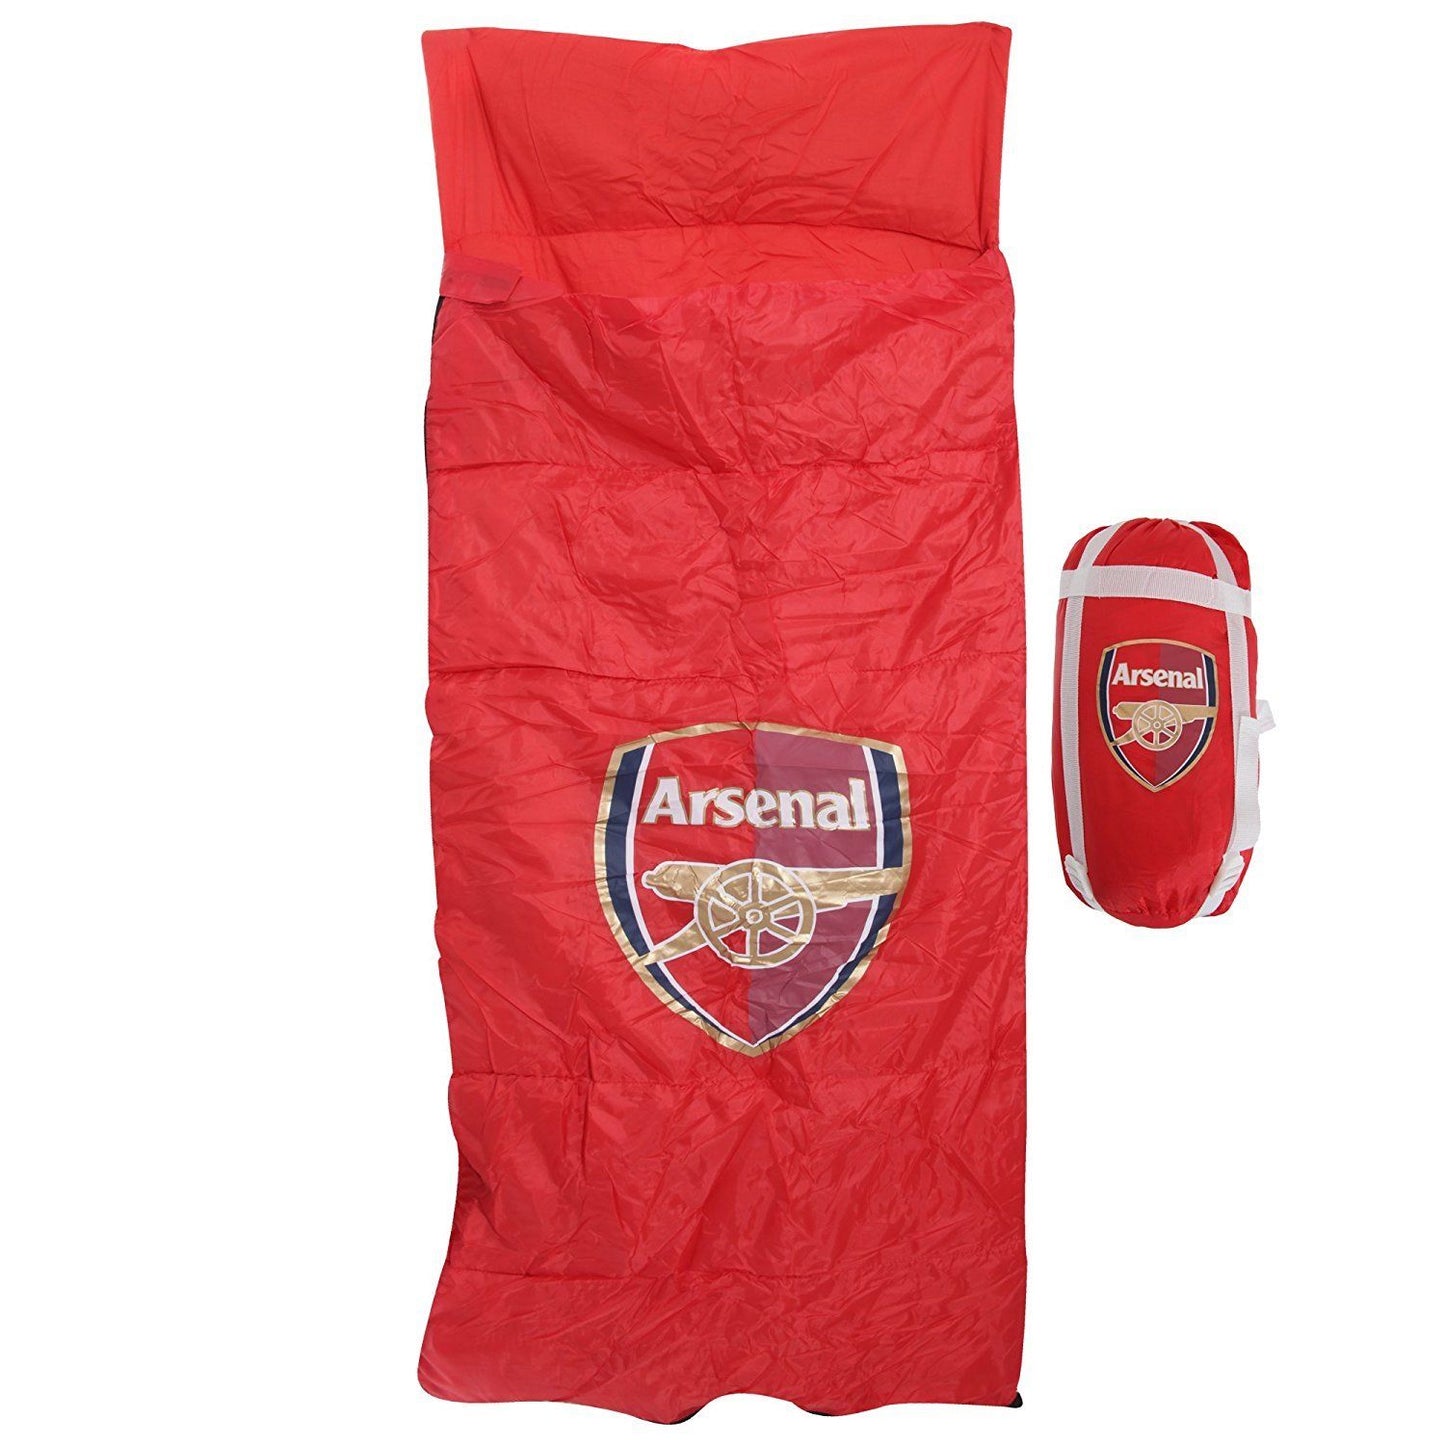 Arsenal F.C Sleeping Bag Official Merchandise Carry Bag